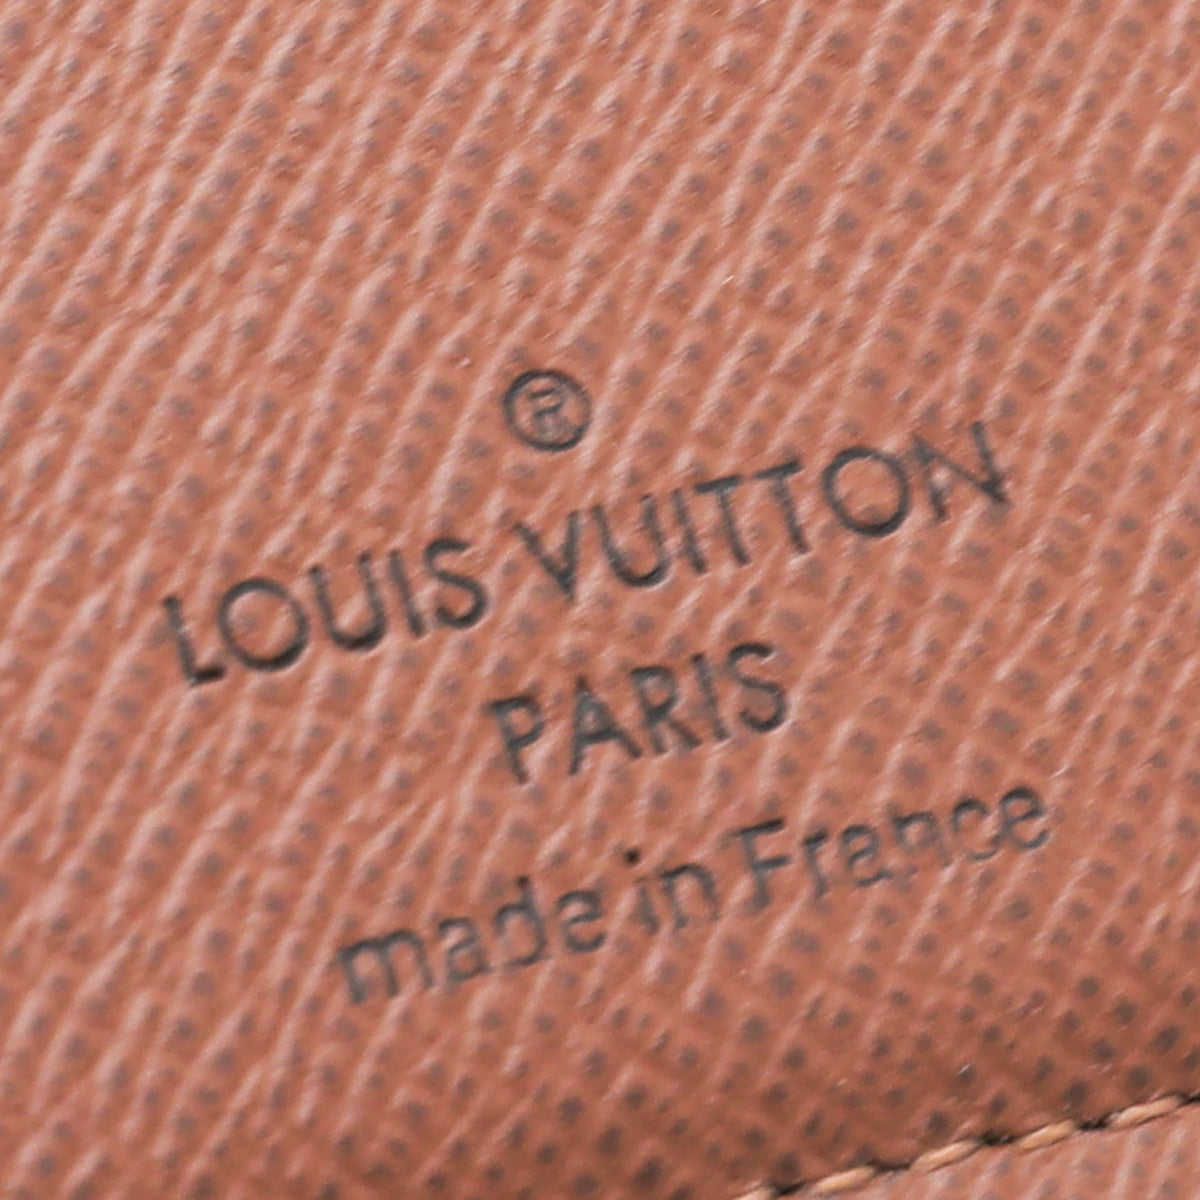 Louis Vuitton® Brazza Wallet Monogram. Size  Louis vuitton, Monogram, Louis  vuitton monogram